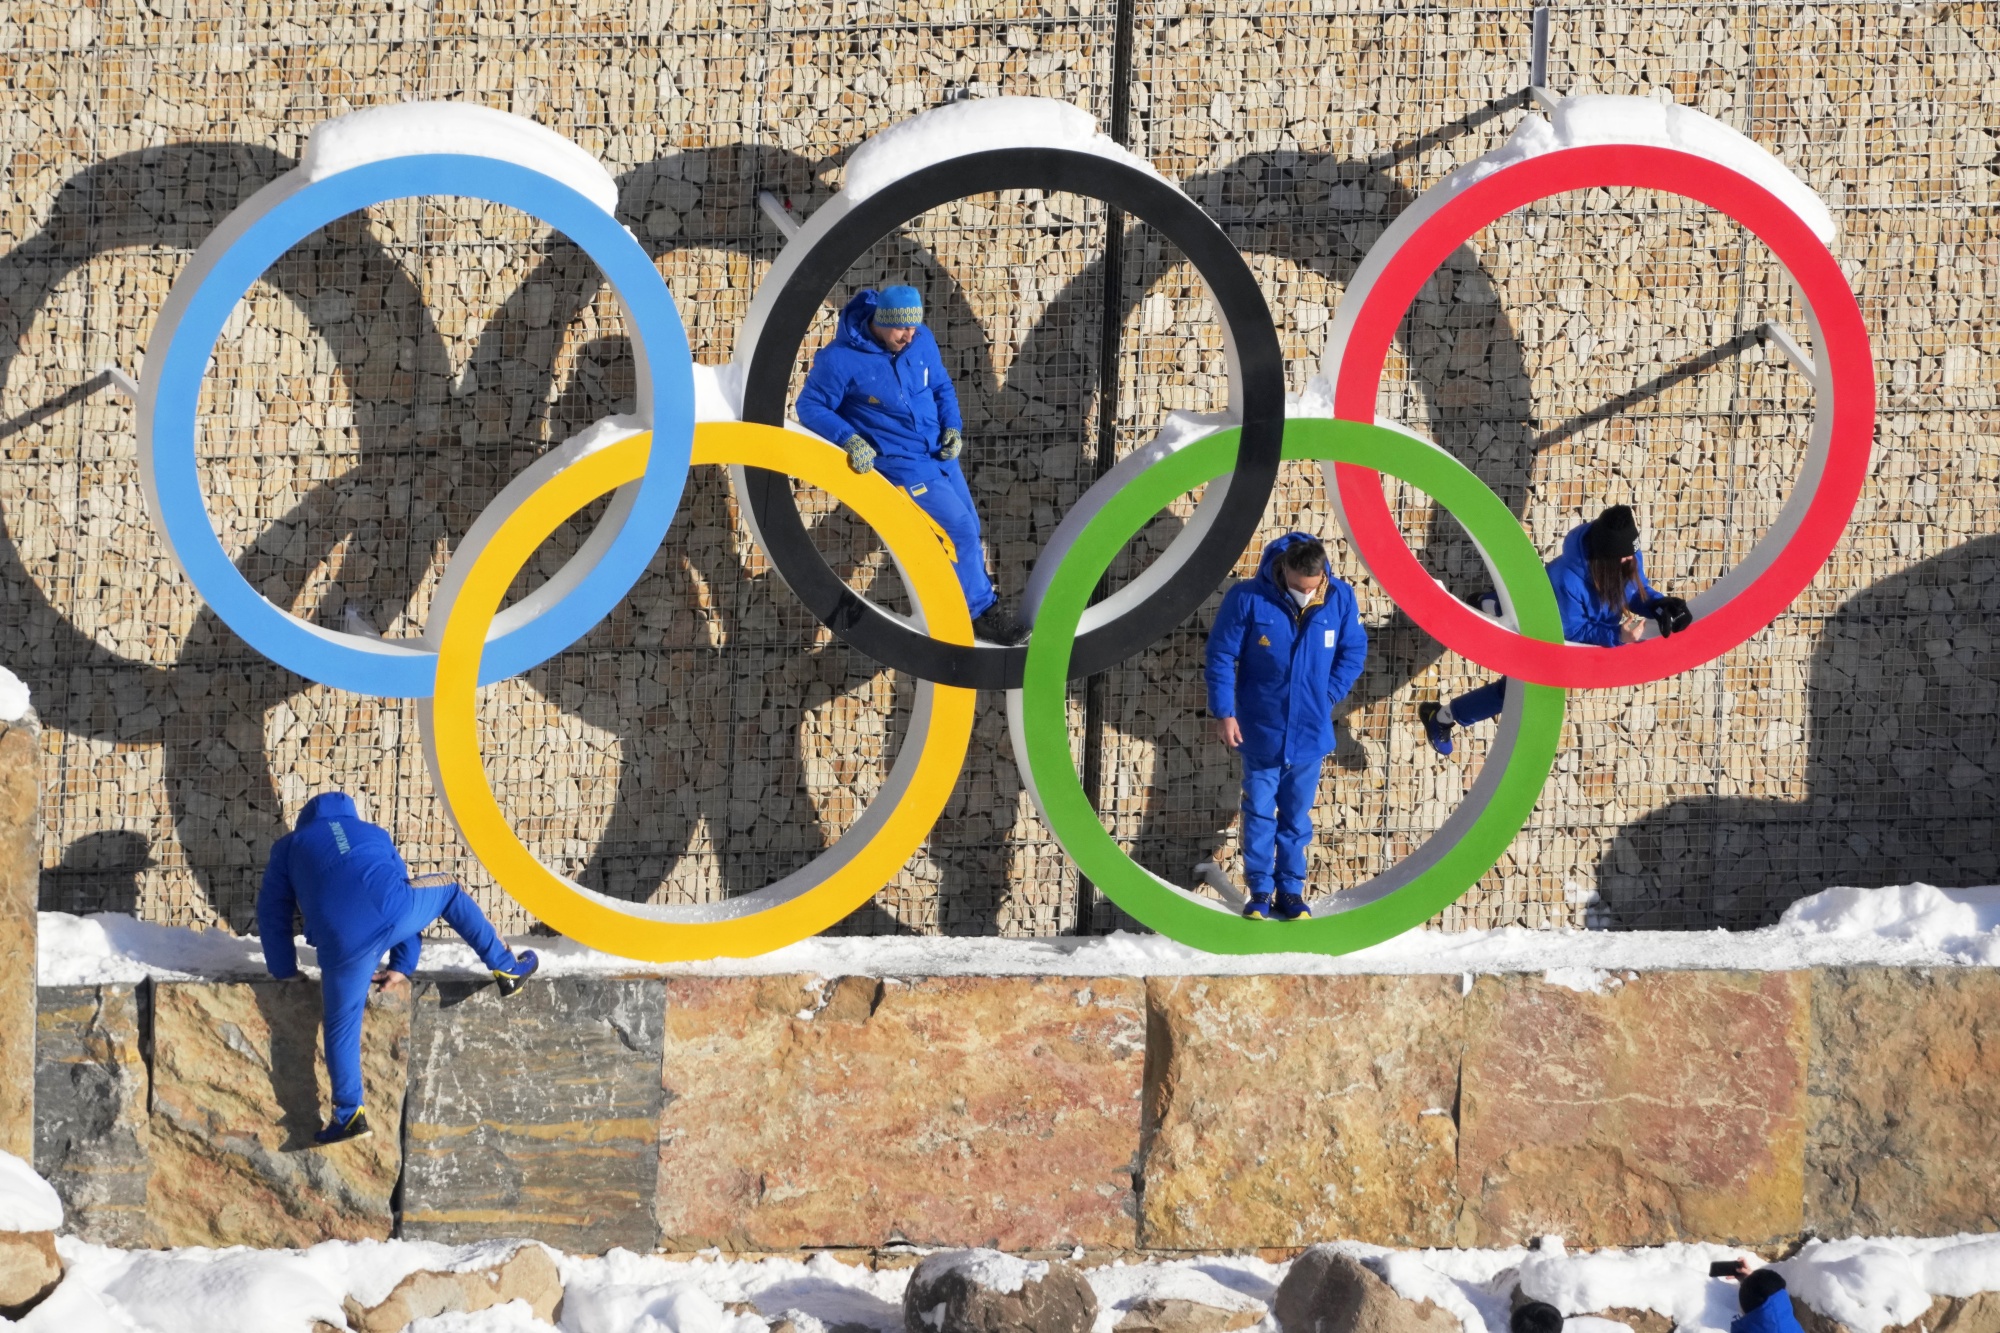 Winter Olympics: Wednesday, February 14